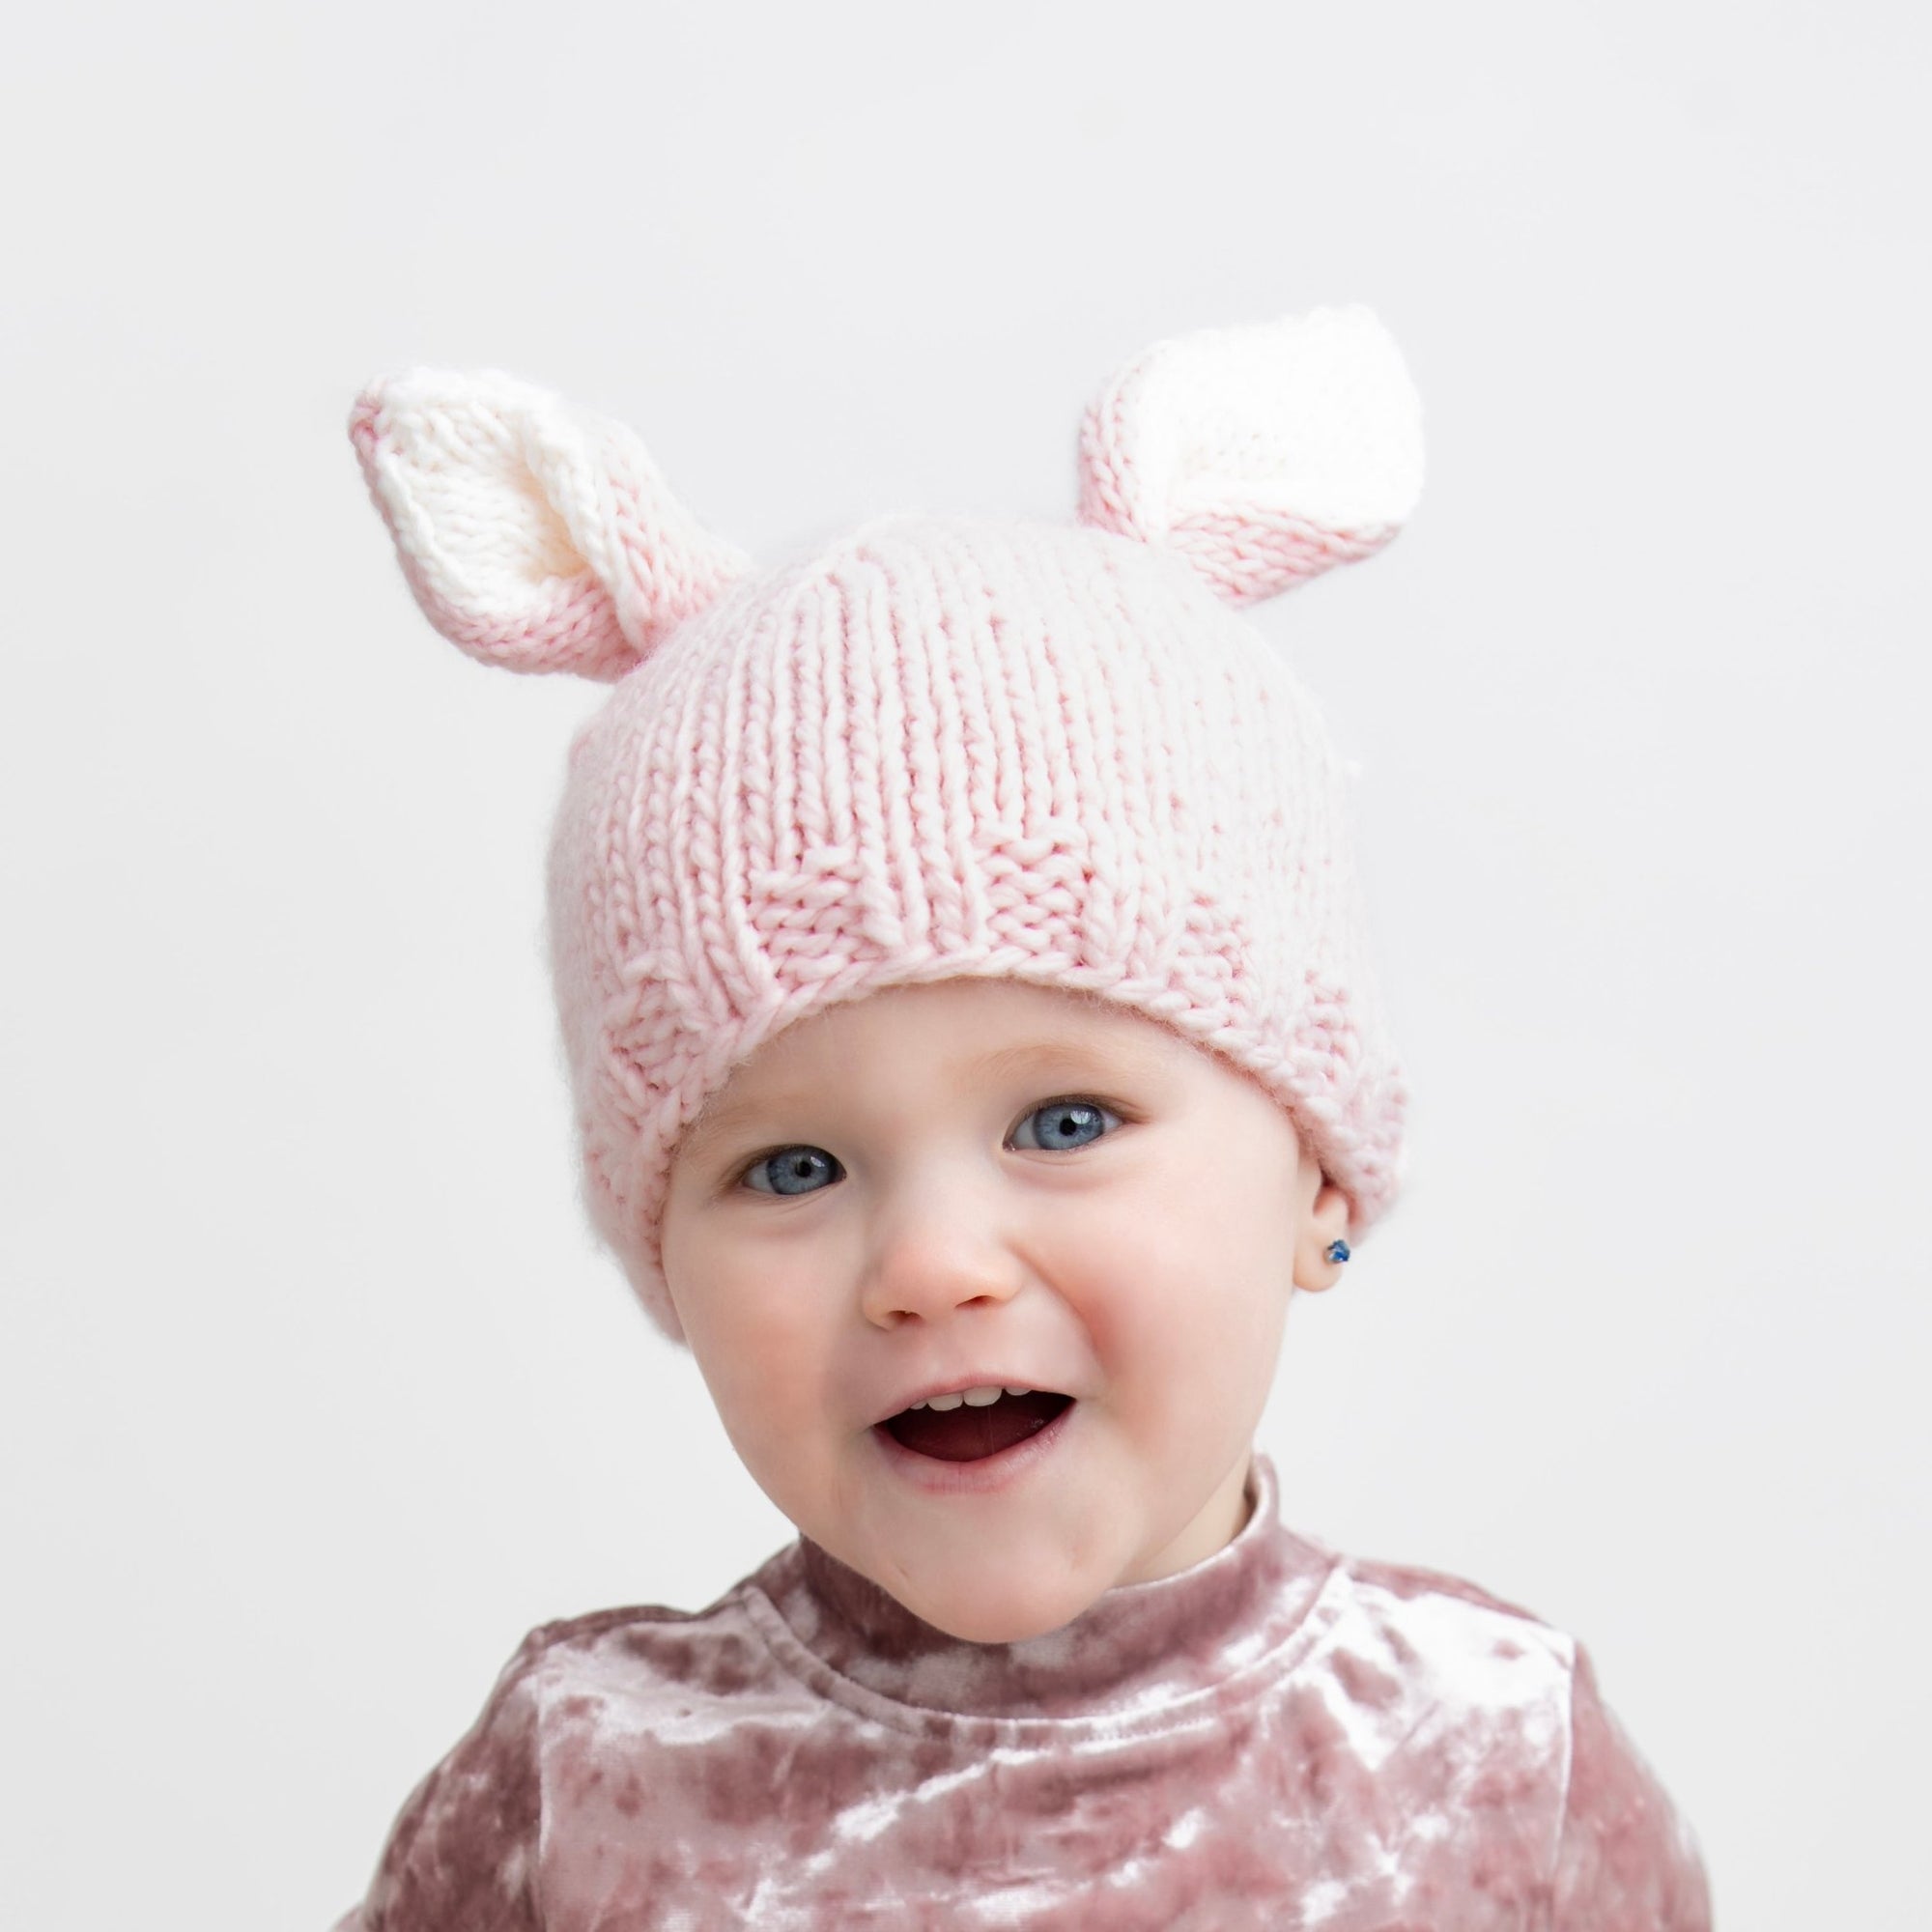 Bunny Ears Blush Beanie Hat Ships 1/1-1/30 - Beanie Hats